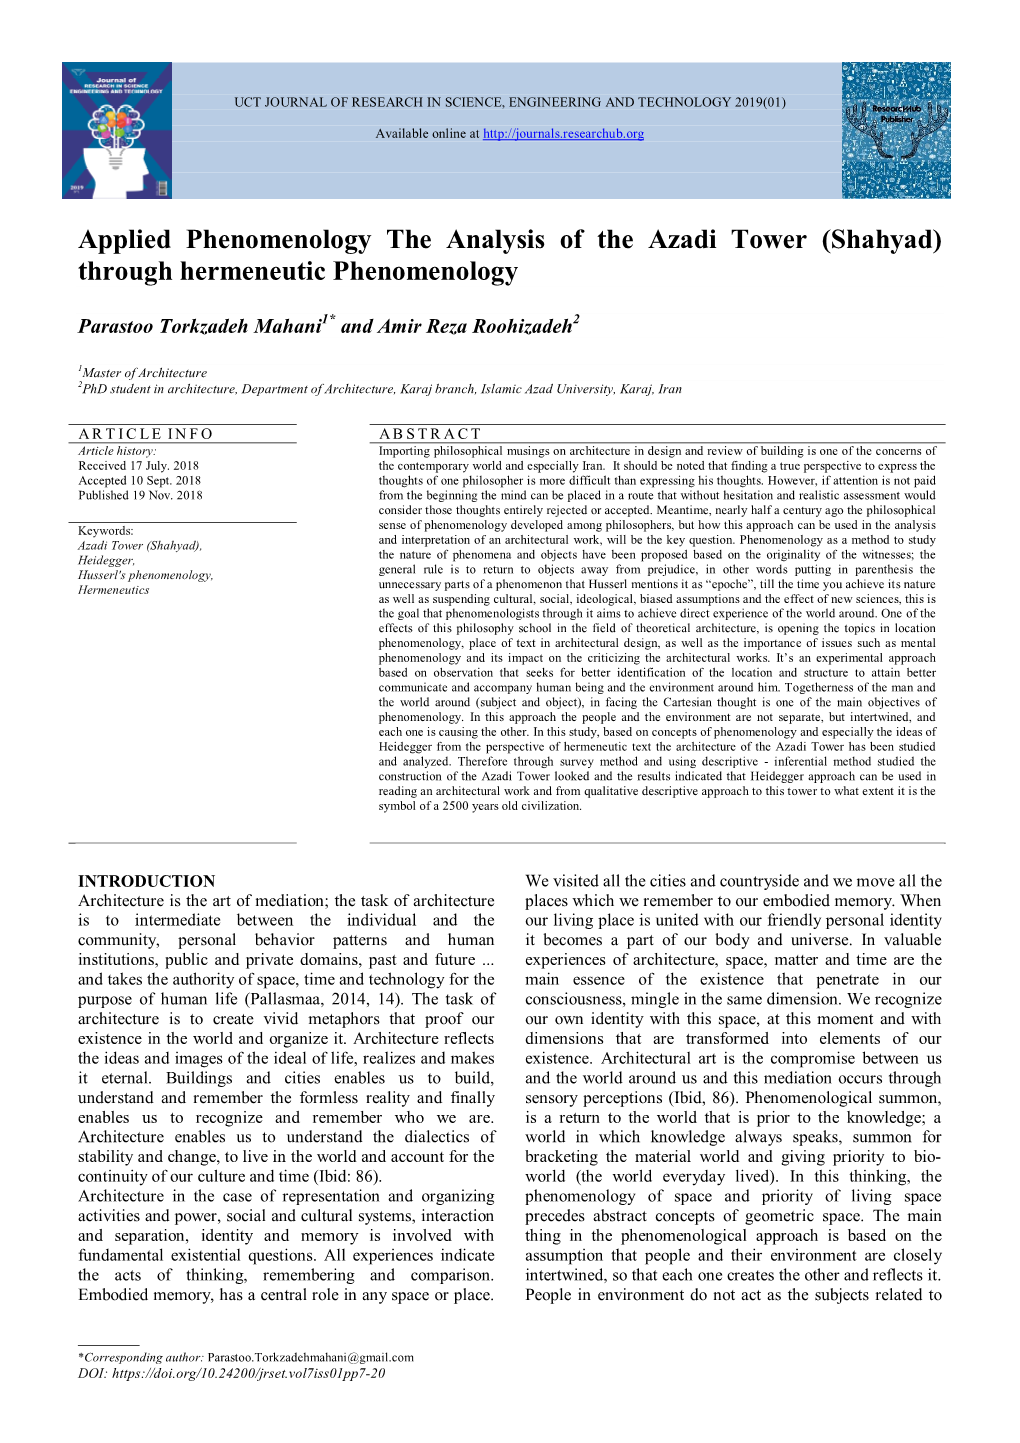 Applied Phenomenology the Analysis of the Azadi Tower (Shahyad) Through Hermeneutic Phenomenology